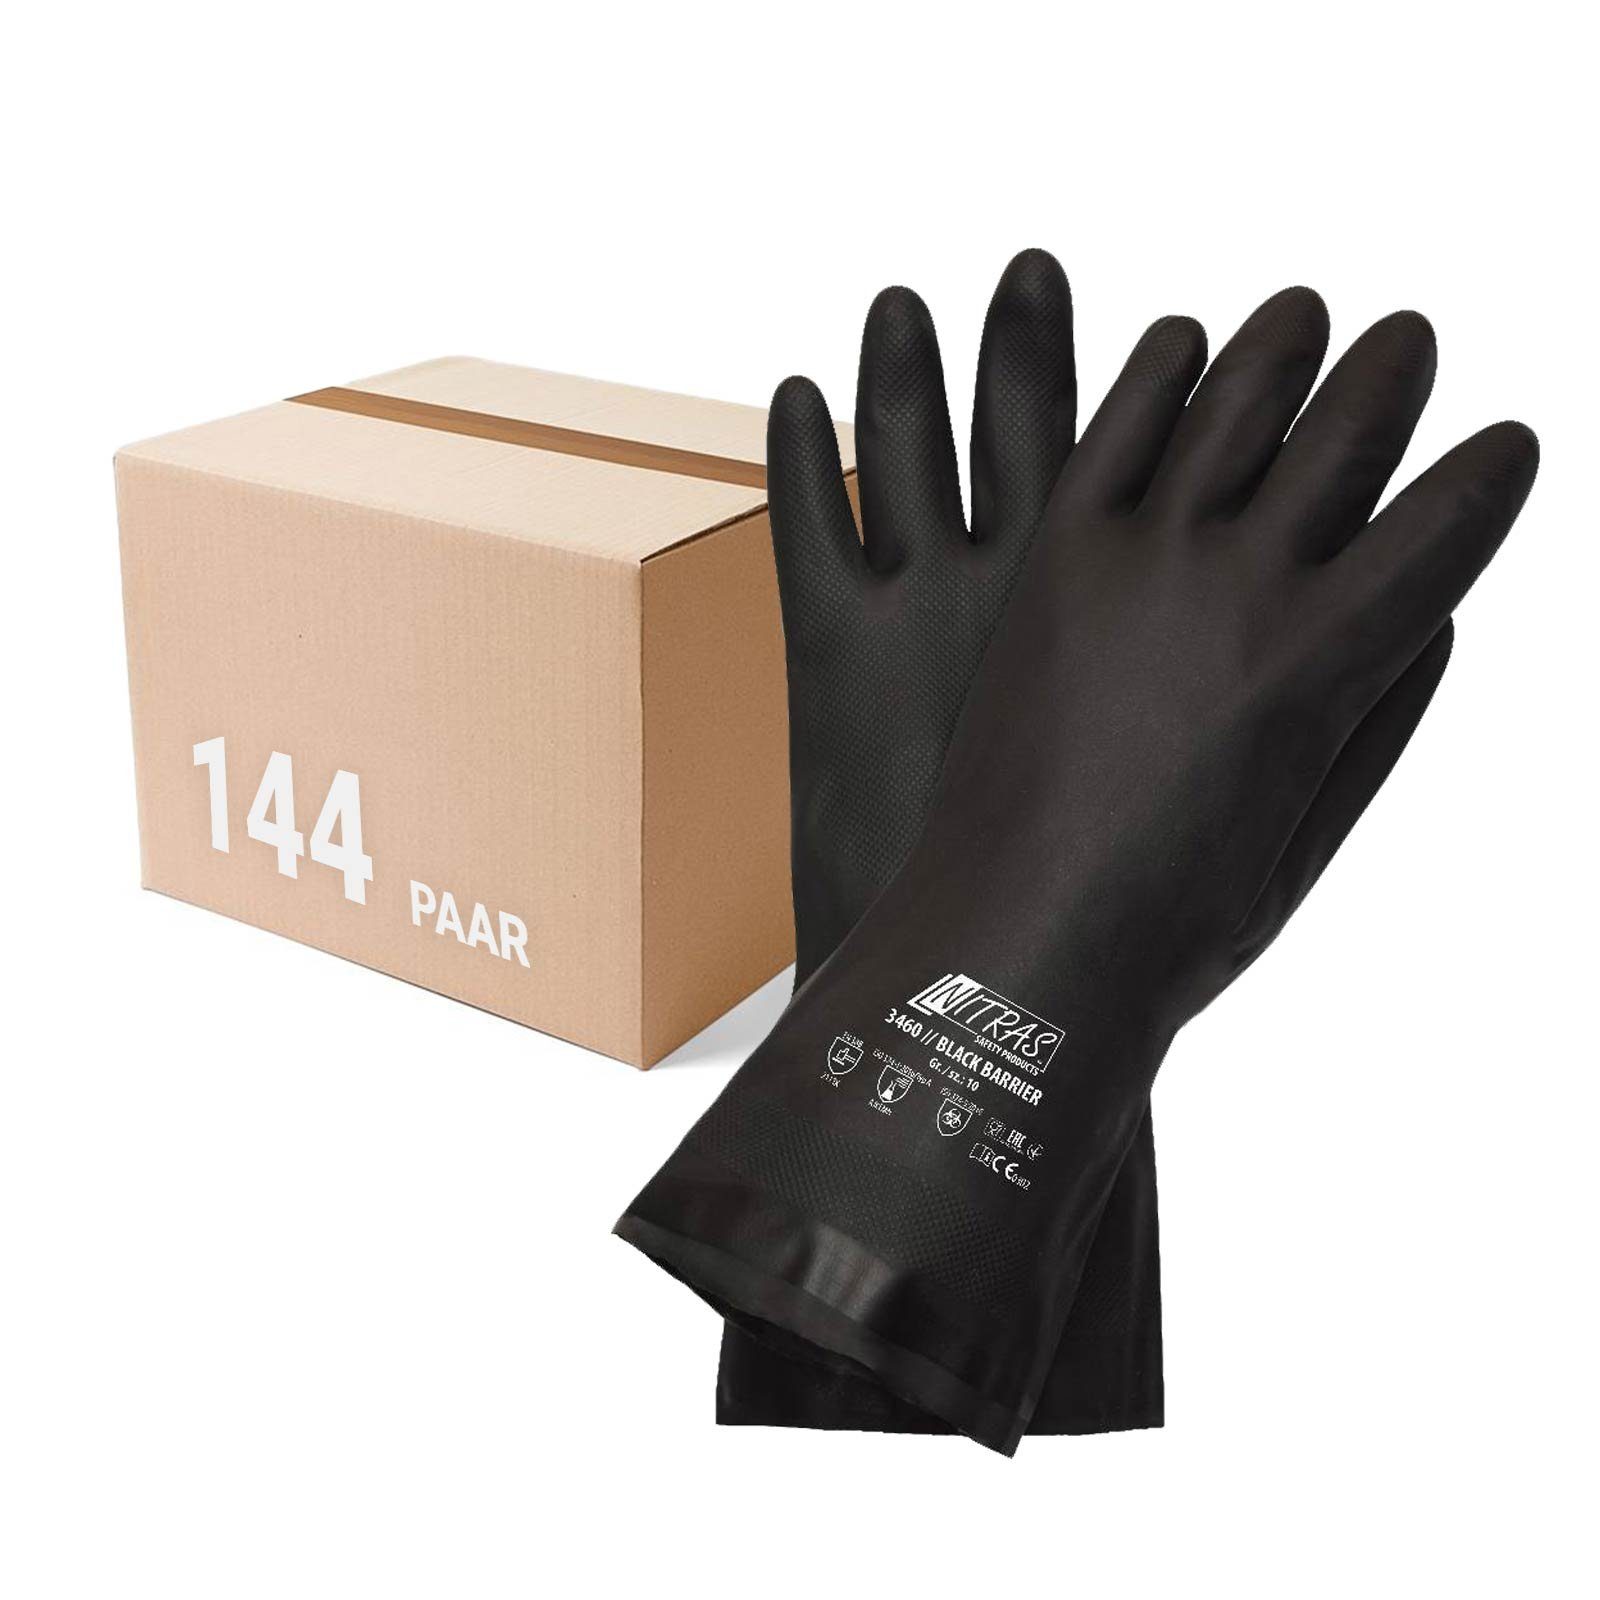 Nitras Putzhandschuh 3460 Chloroprene-Handschuhe 144 Black (Set) Paar NITRAS velourisiert Barrier